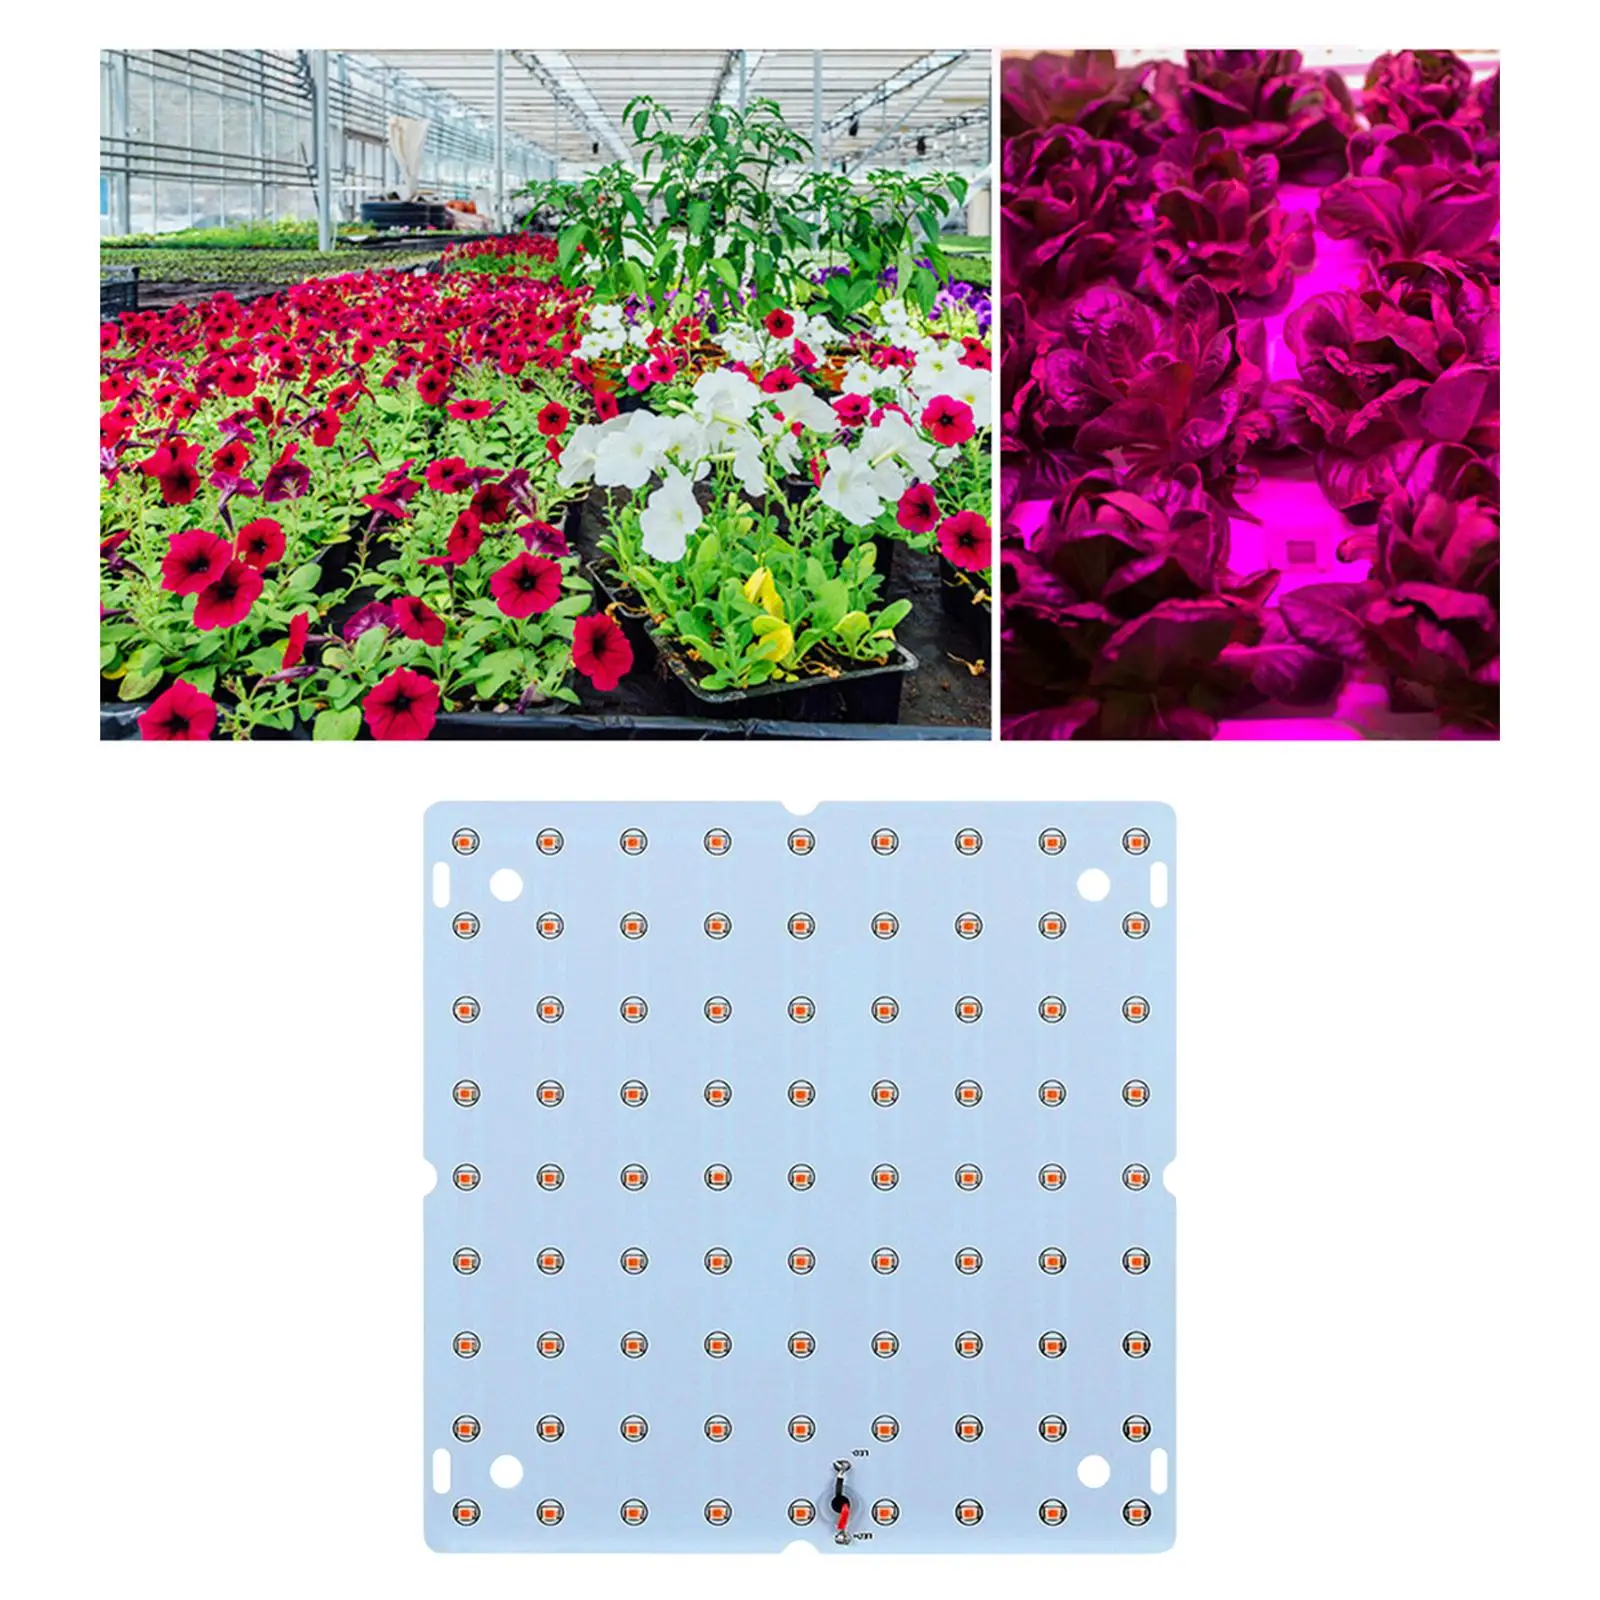 85-265V Plant Grow Light Full Grow Light for Vegetable Seed Starting Greenhouse Flower Bloom Hydroponics